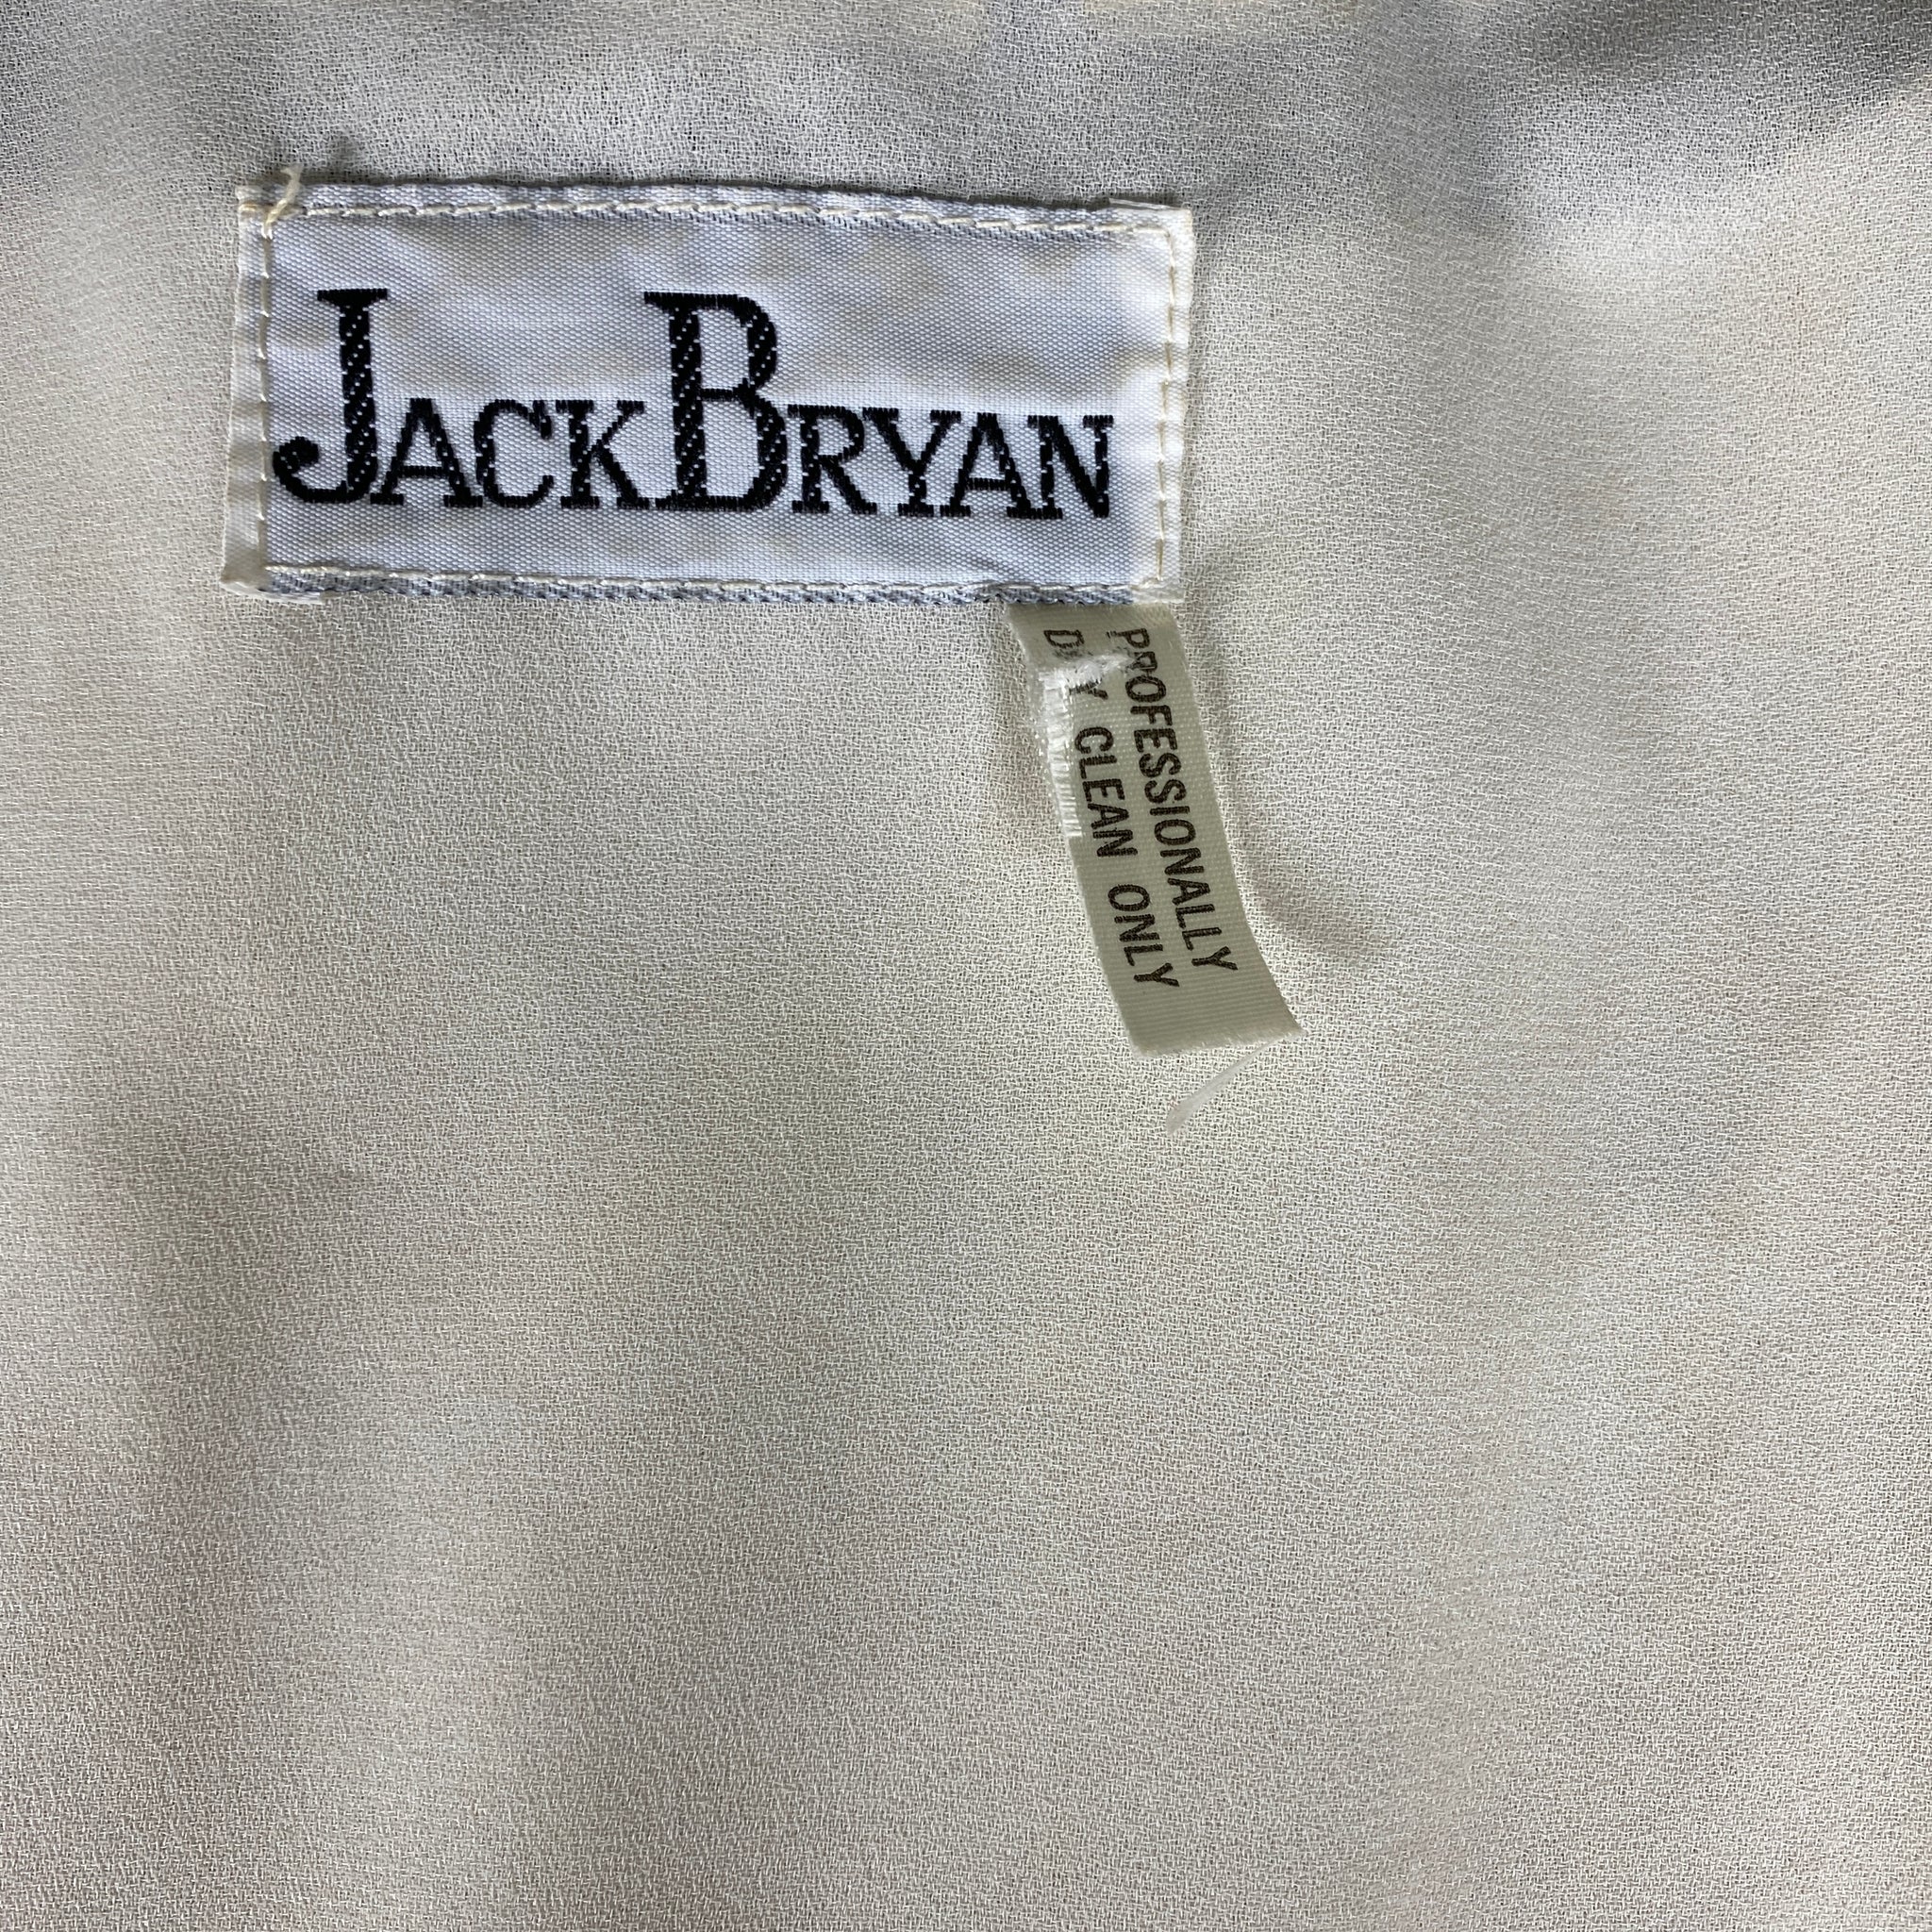 Jack Bryan Vintage Sequin Beaded Jacket - S/M